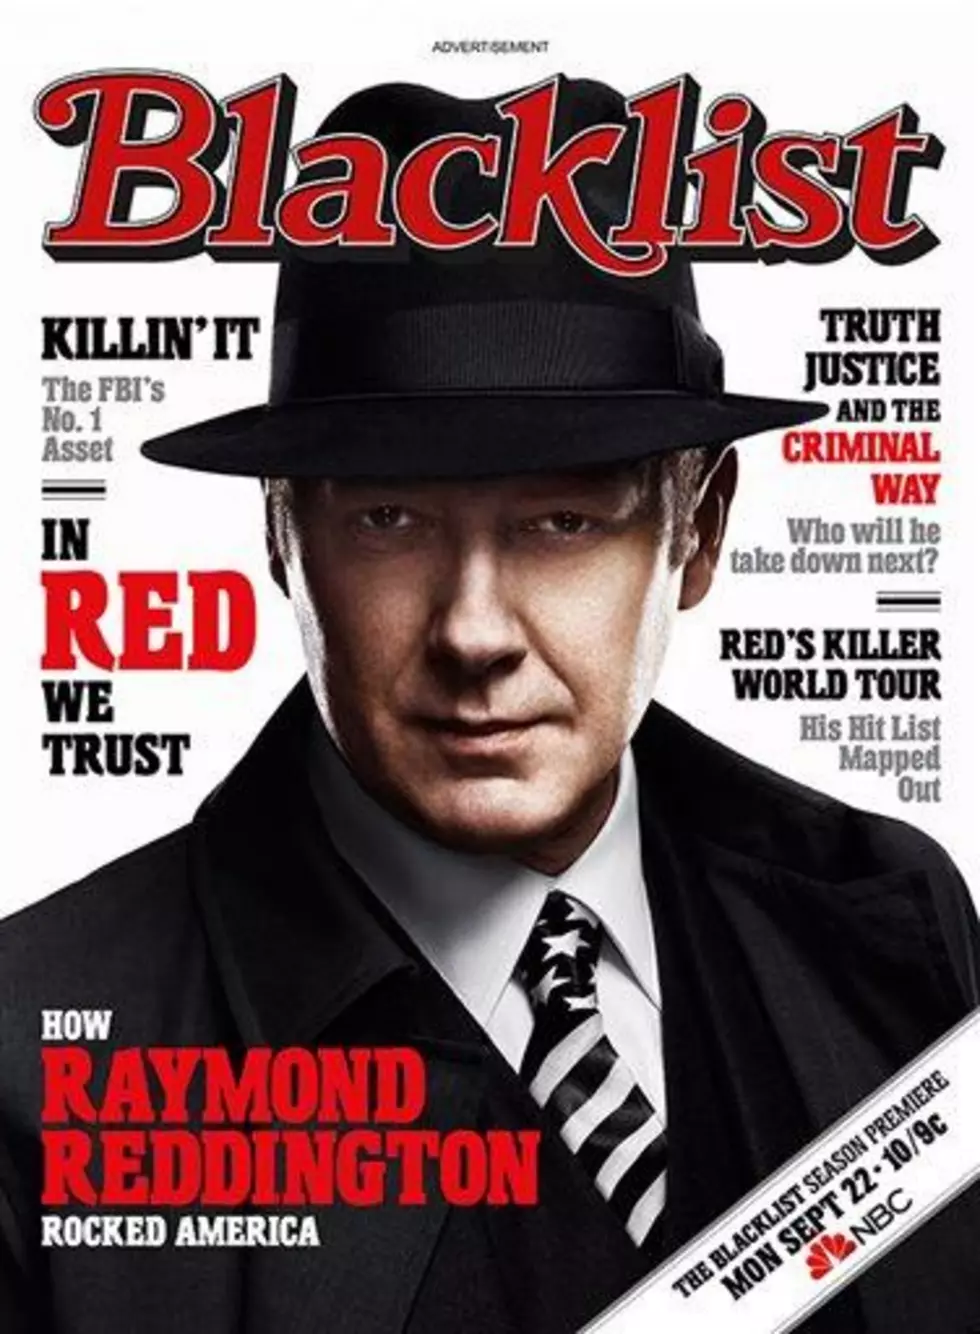 NBC’s ‘Blacklist’ gets A-list marketing treatment